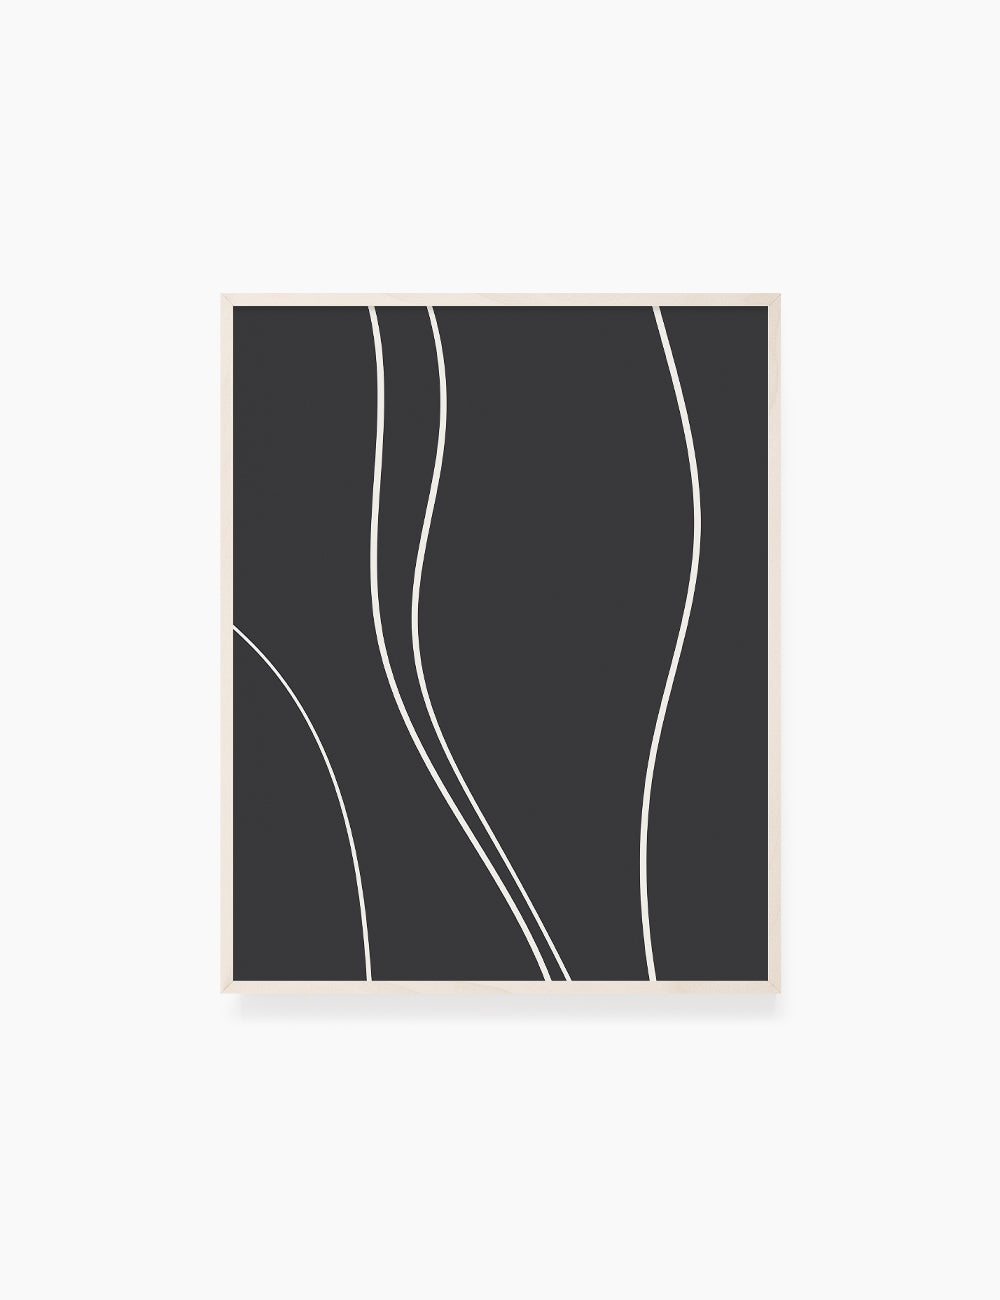 MINIMAL LINE ART. Abstract Waves. Boho. Black and White. Printable Wall Art Illustration. - PAPER MOON Art & Design